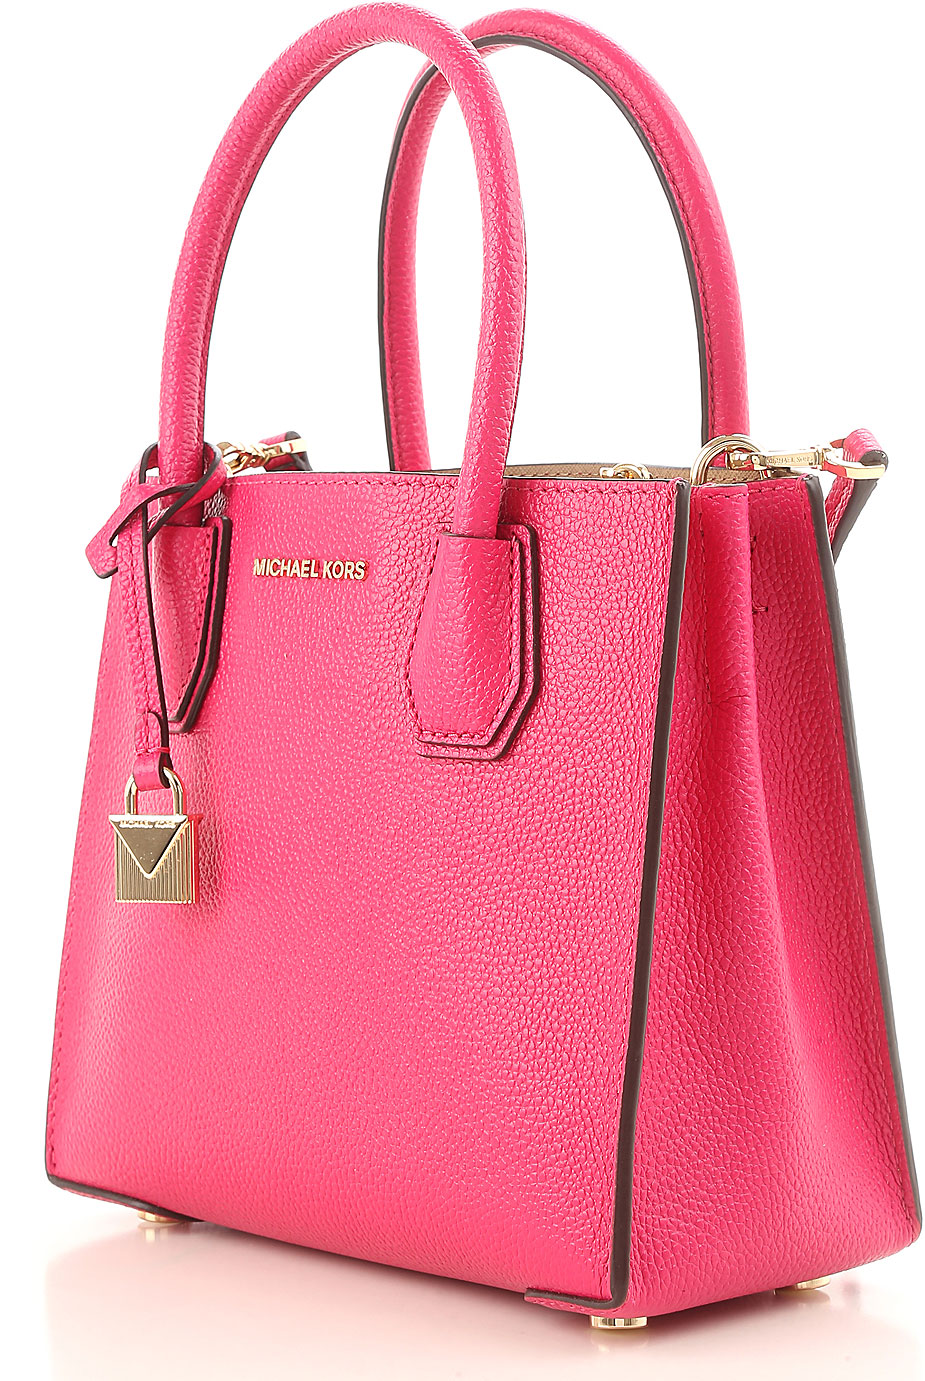 Handbags Michael Kors, Style code: 30f6gm9m2l-564-